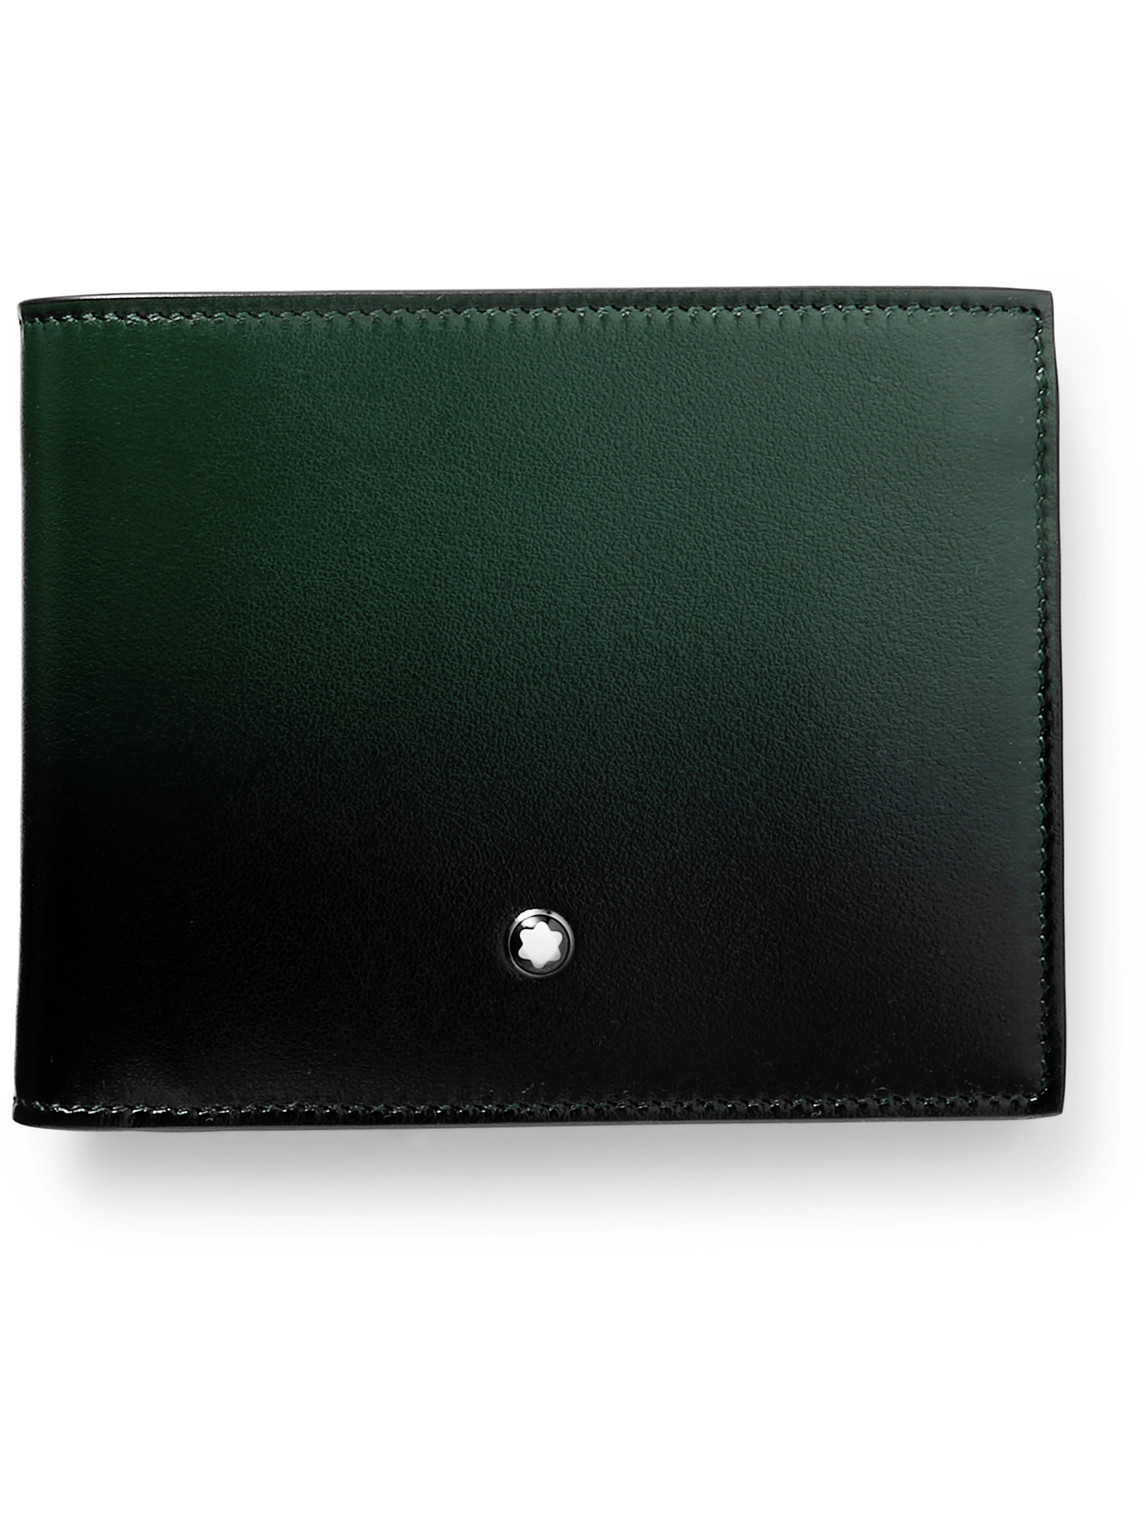 Montblanc Meisterstück Dégradé Leather Billfold Wallet In Green